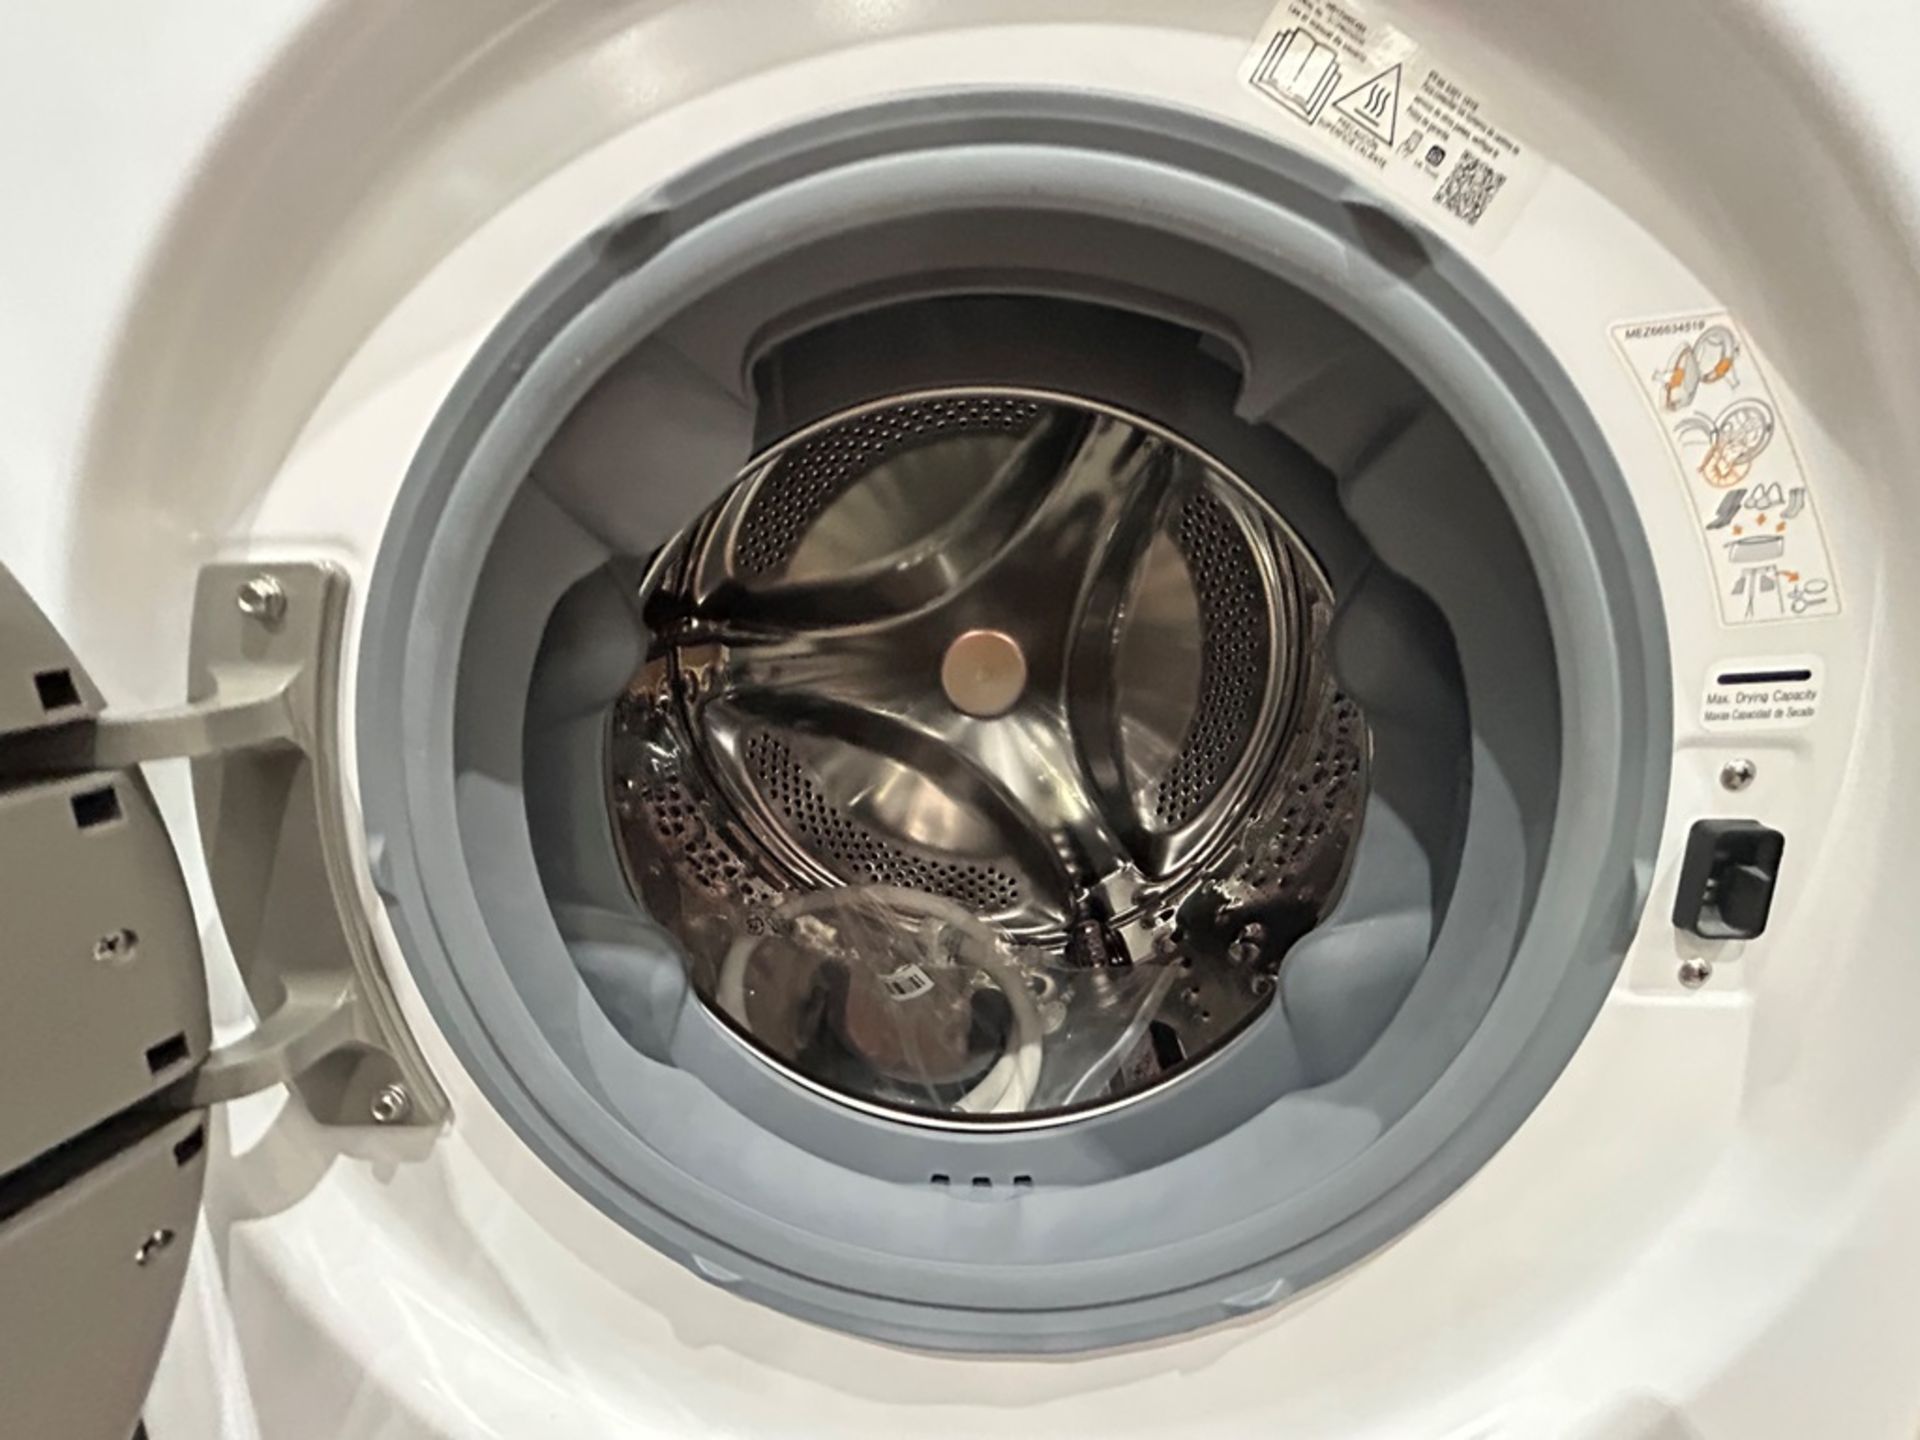 Lote de 2 lavadoras contiene: 1 Lavadora de 17 KG, Marca MIDEA, Modelo M1920901, Serie D00534, Colo - Image 5 of 10